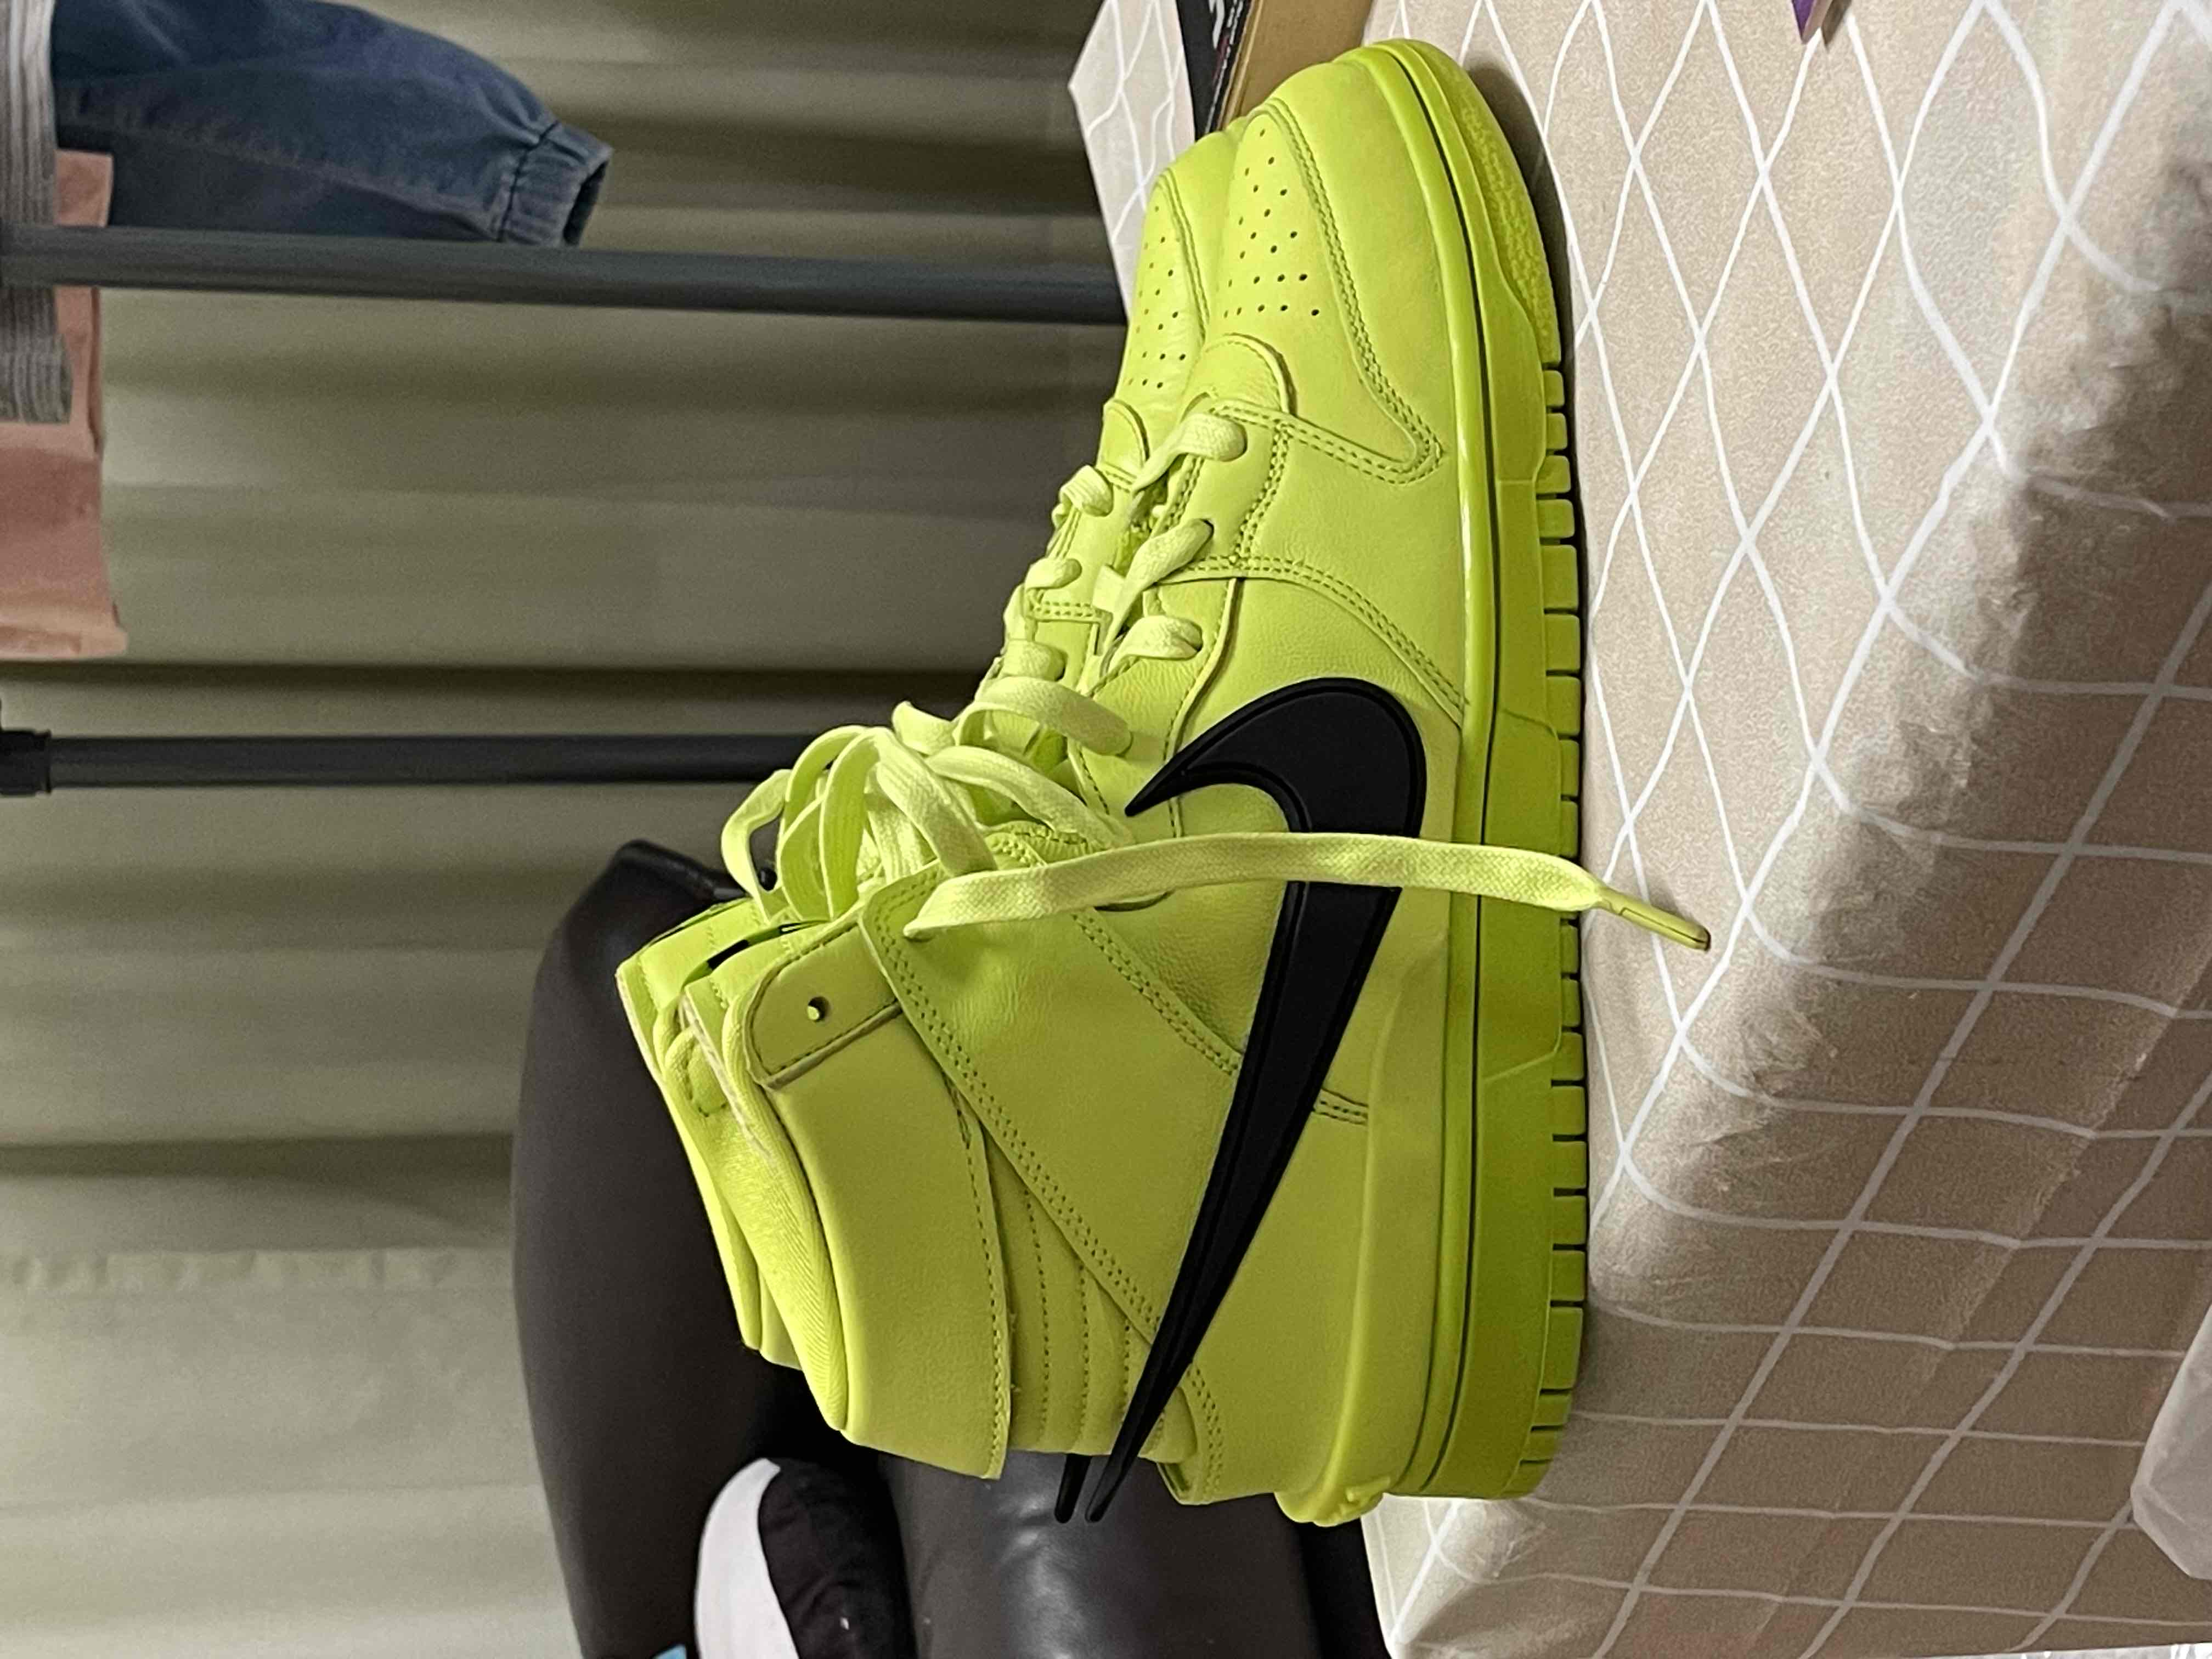 AMBUSH x Nike Dunk High 'Flash Lime'